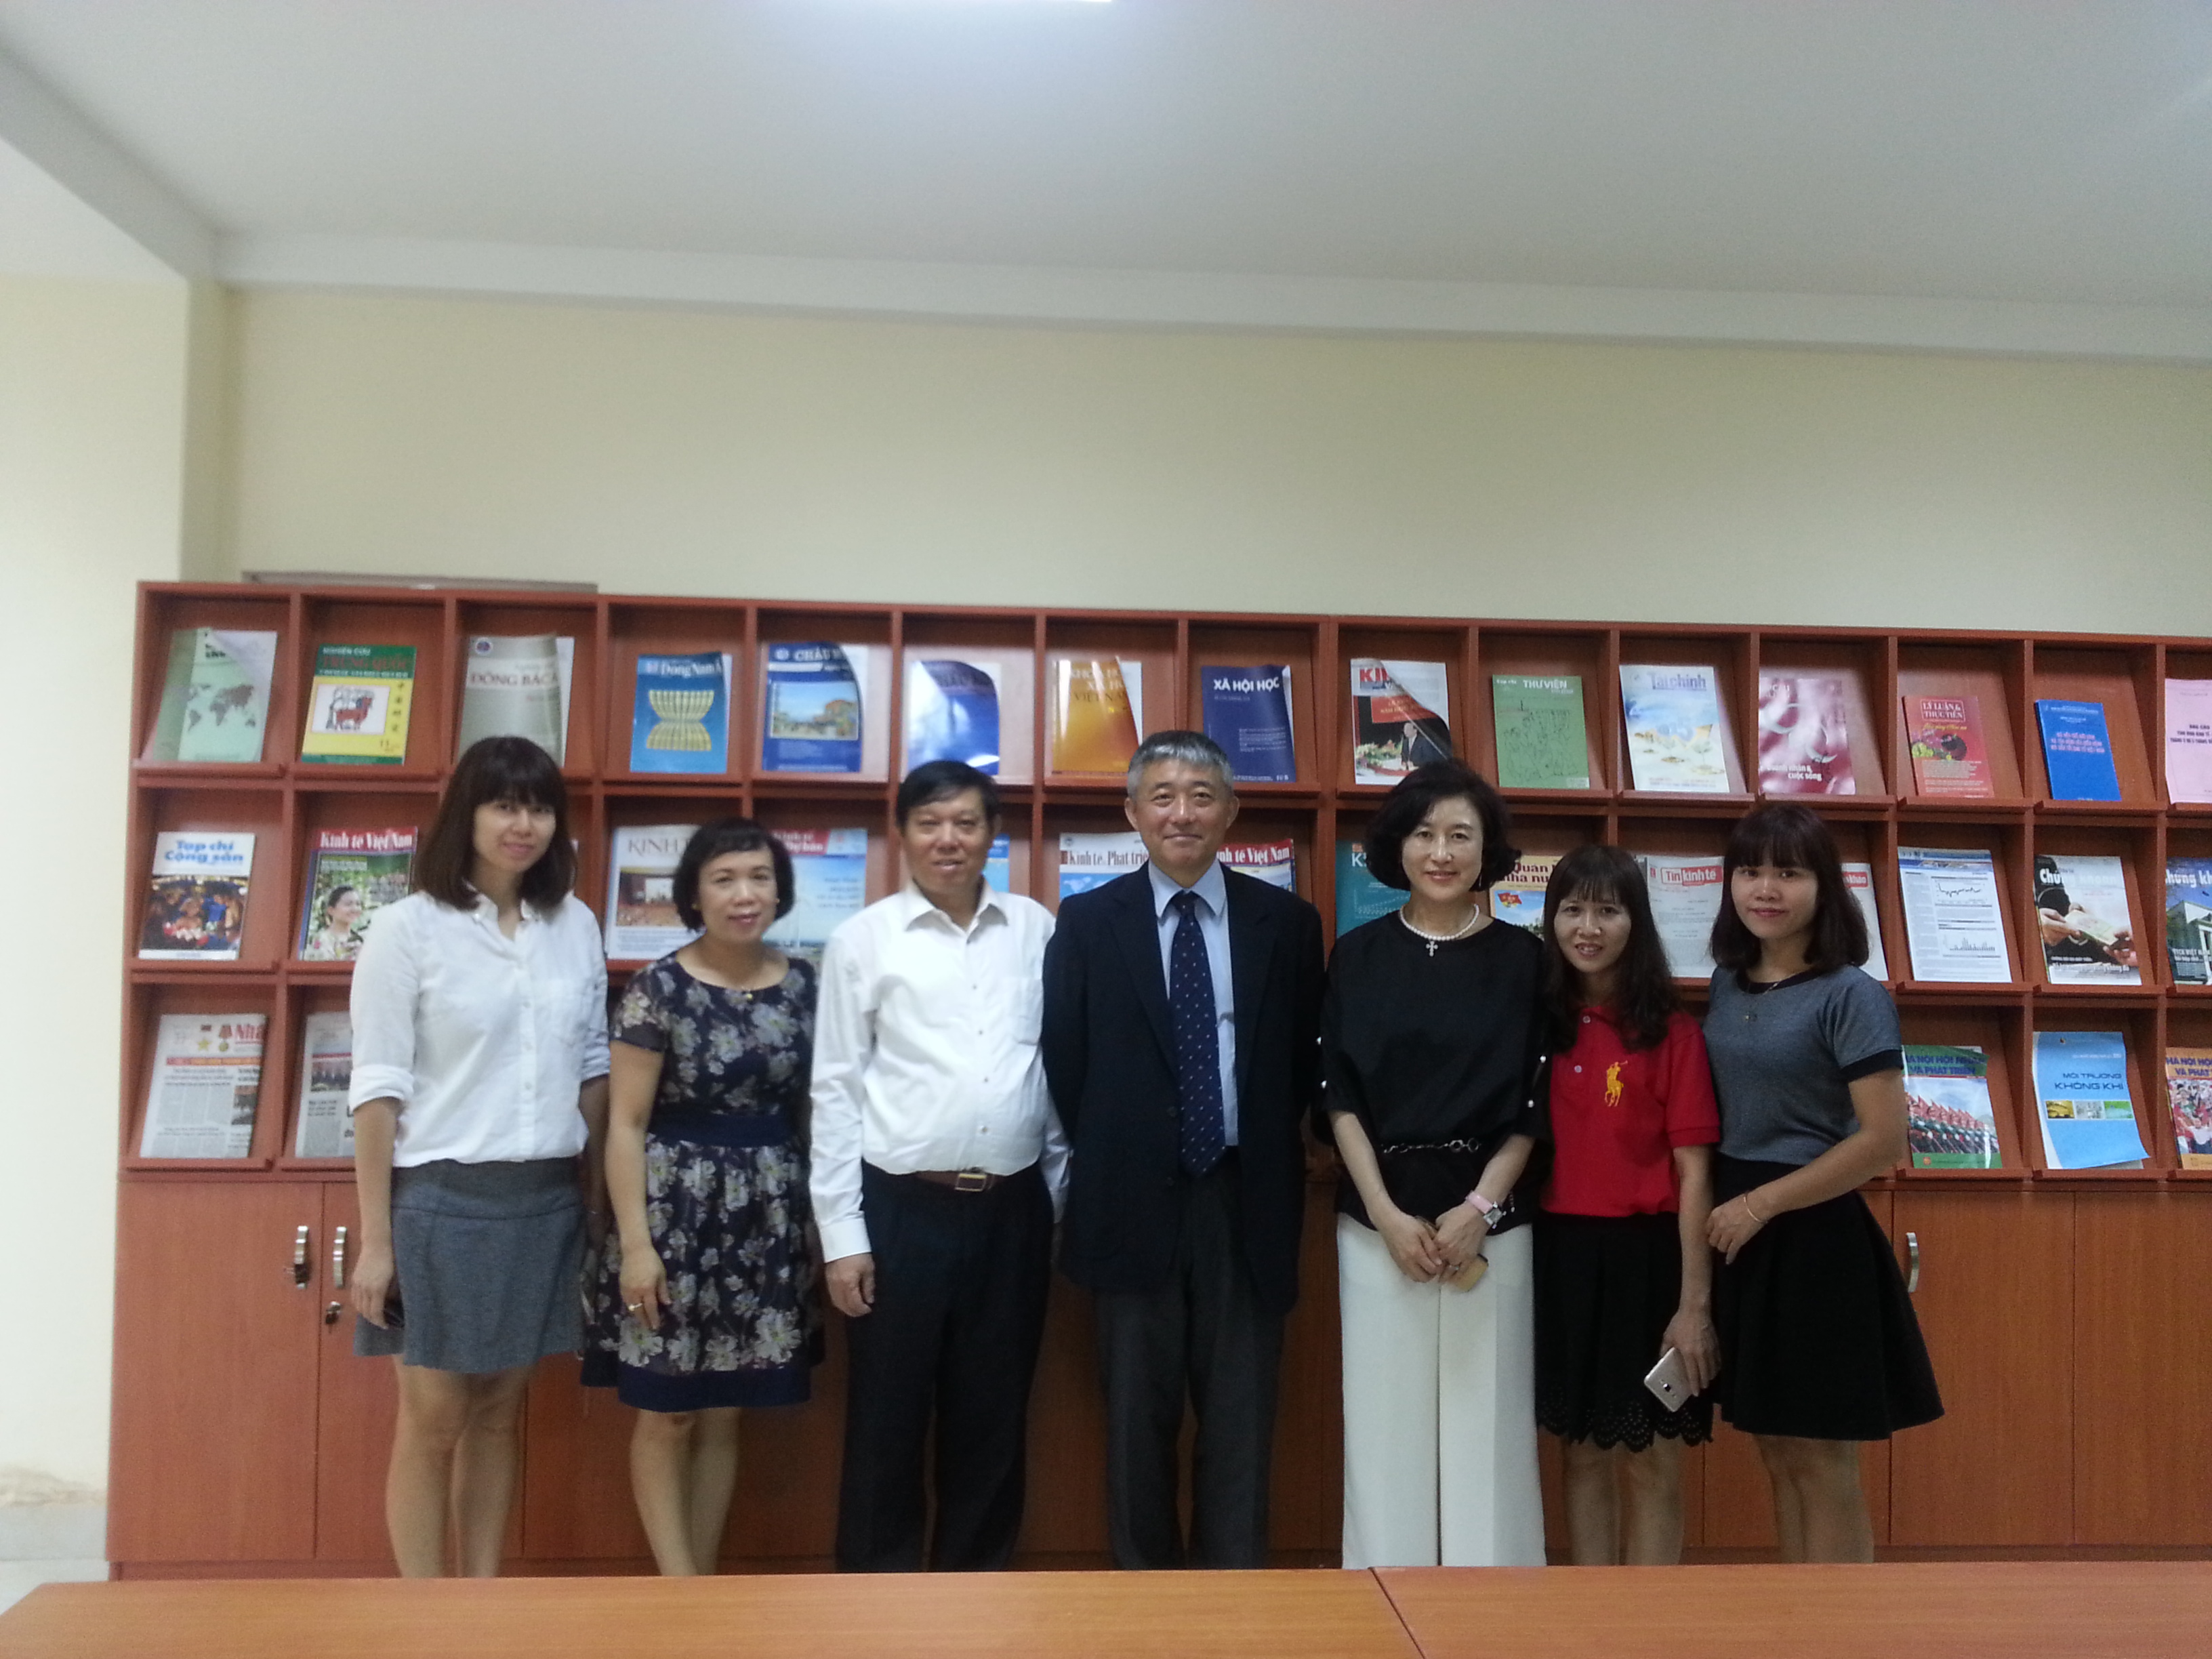 KDI School widens its reach across Korea and the world